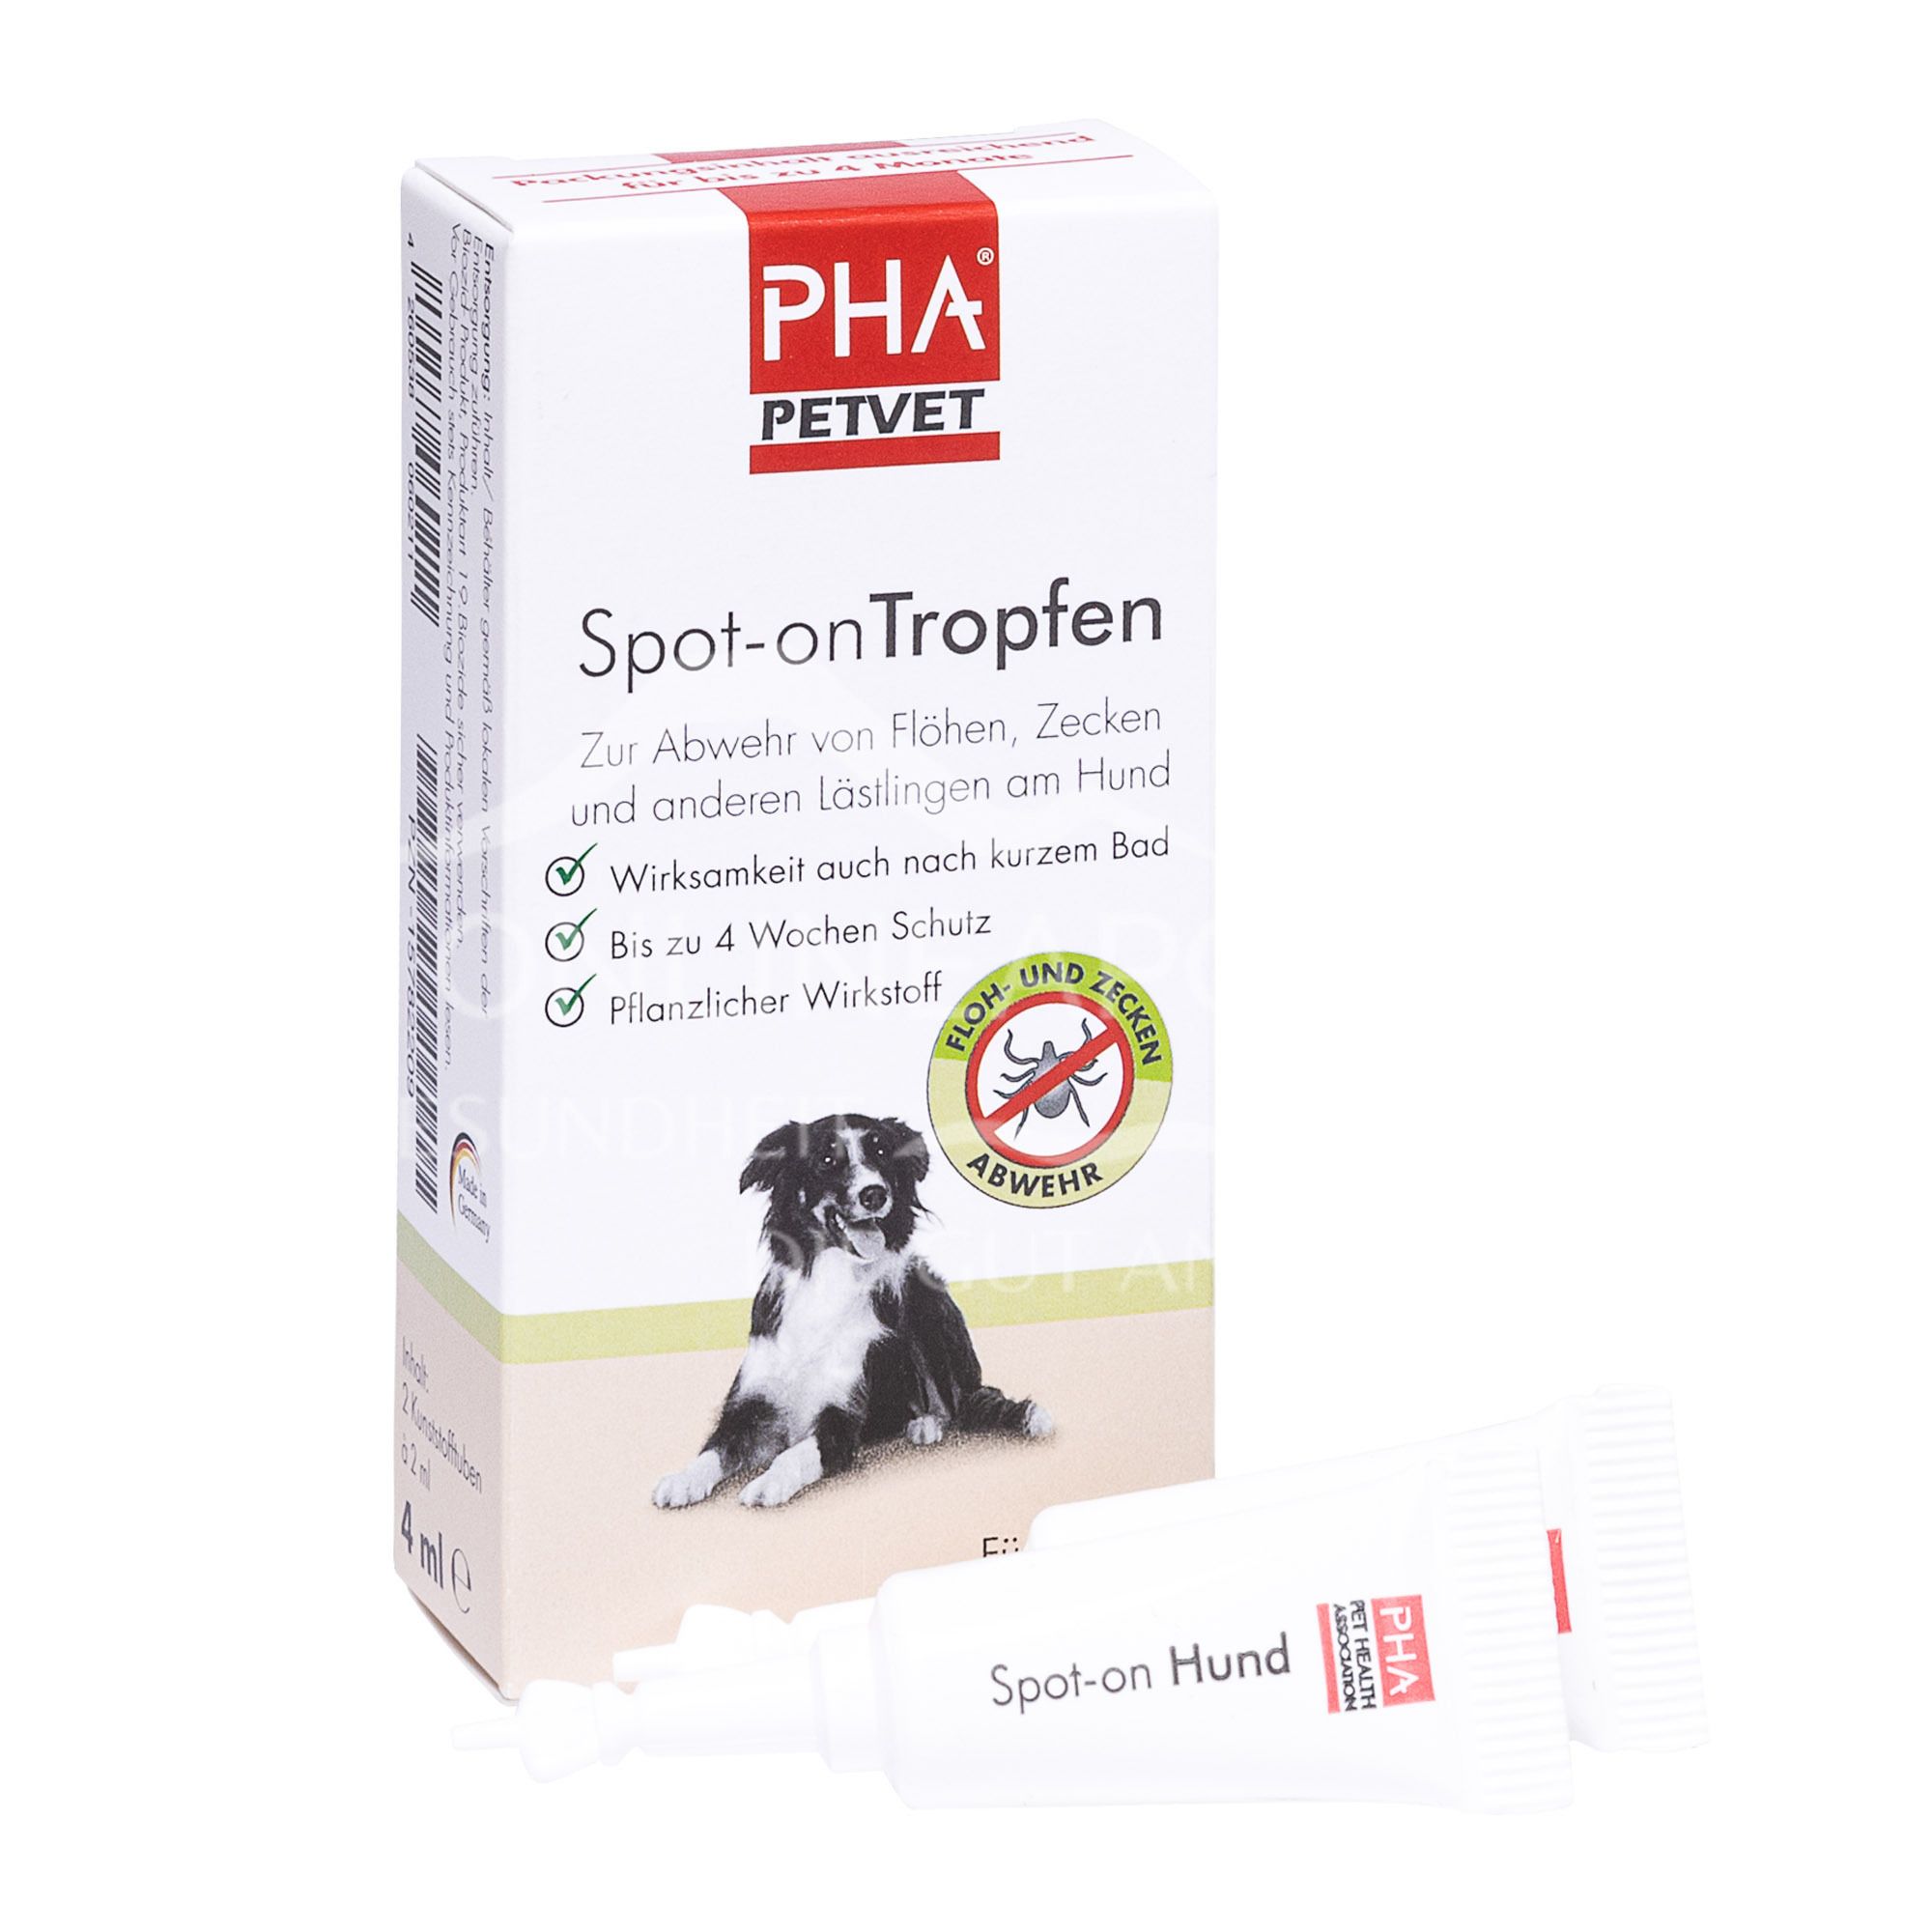 PHA PetVet Spot-on Tropfen für Hunde 2 ml